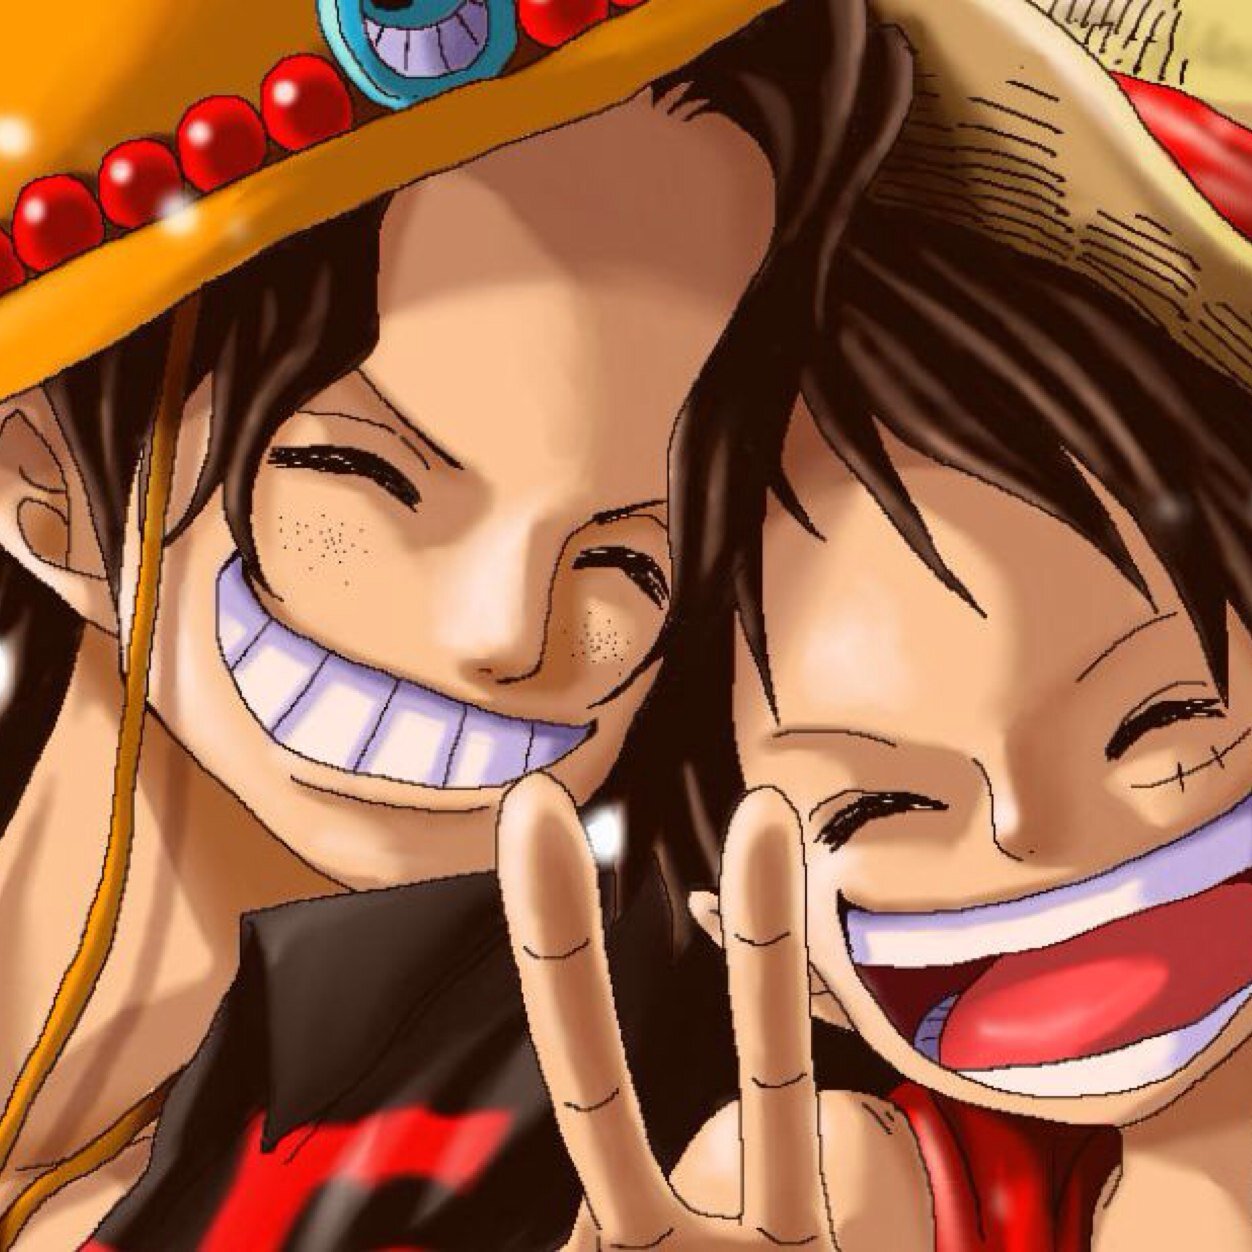 One Pieceさんのツイート エースの画像募集中 Http T Co Beyn0c95yh